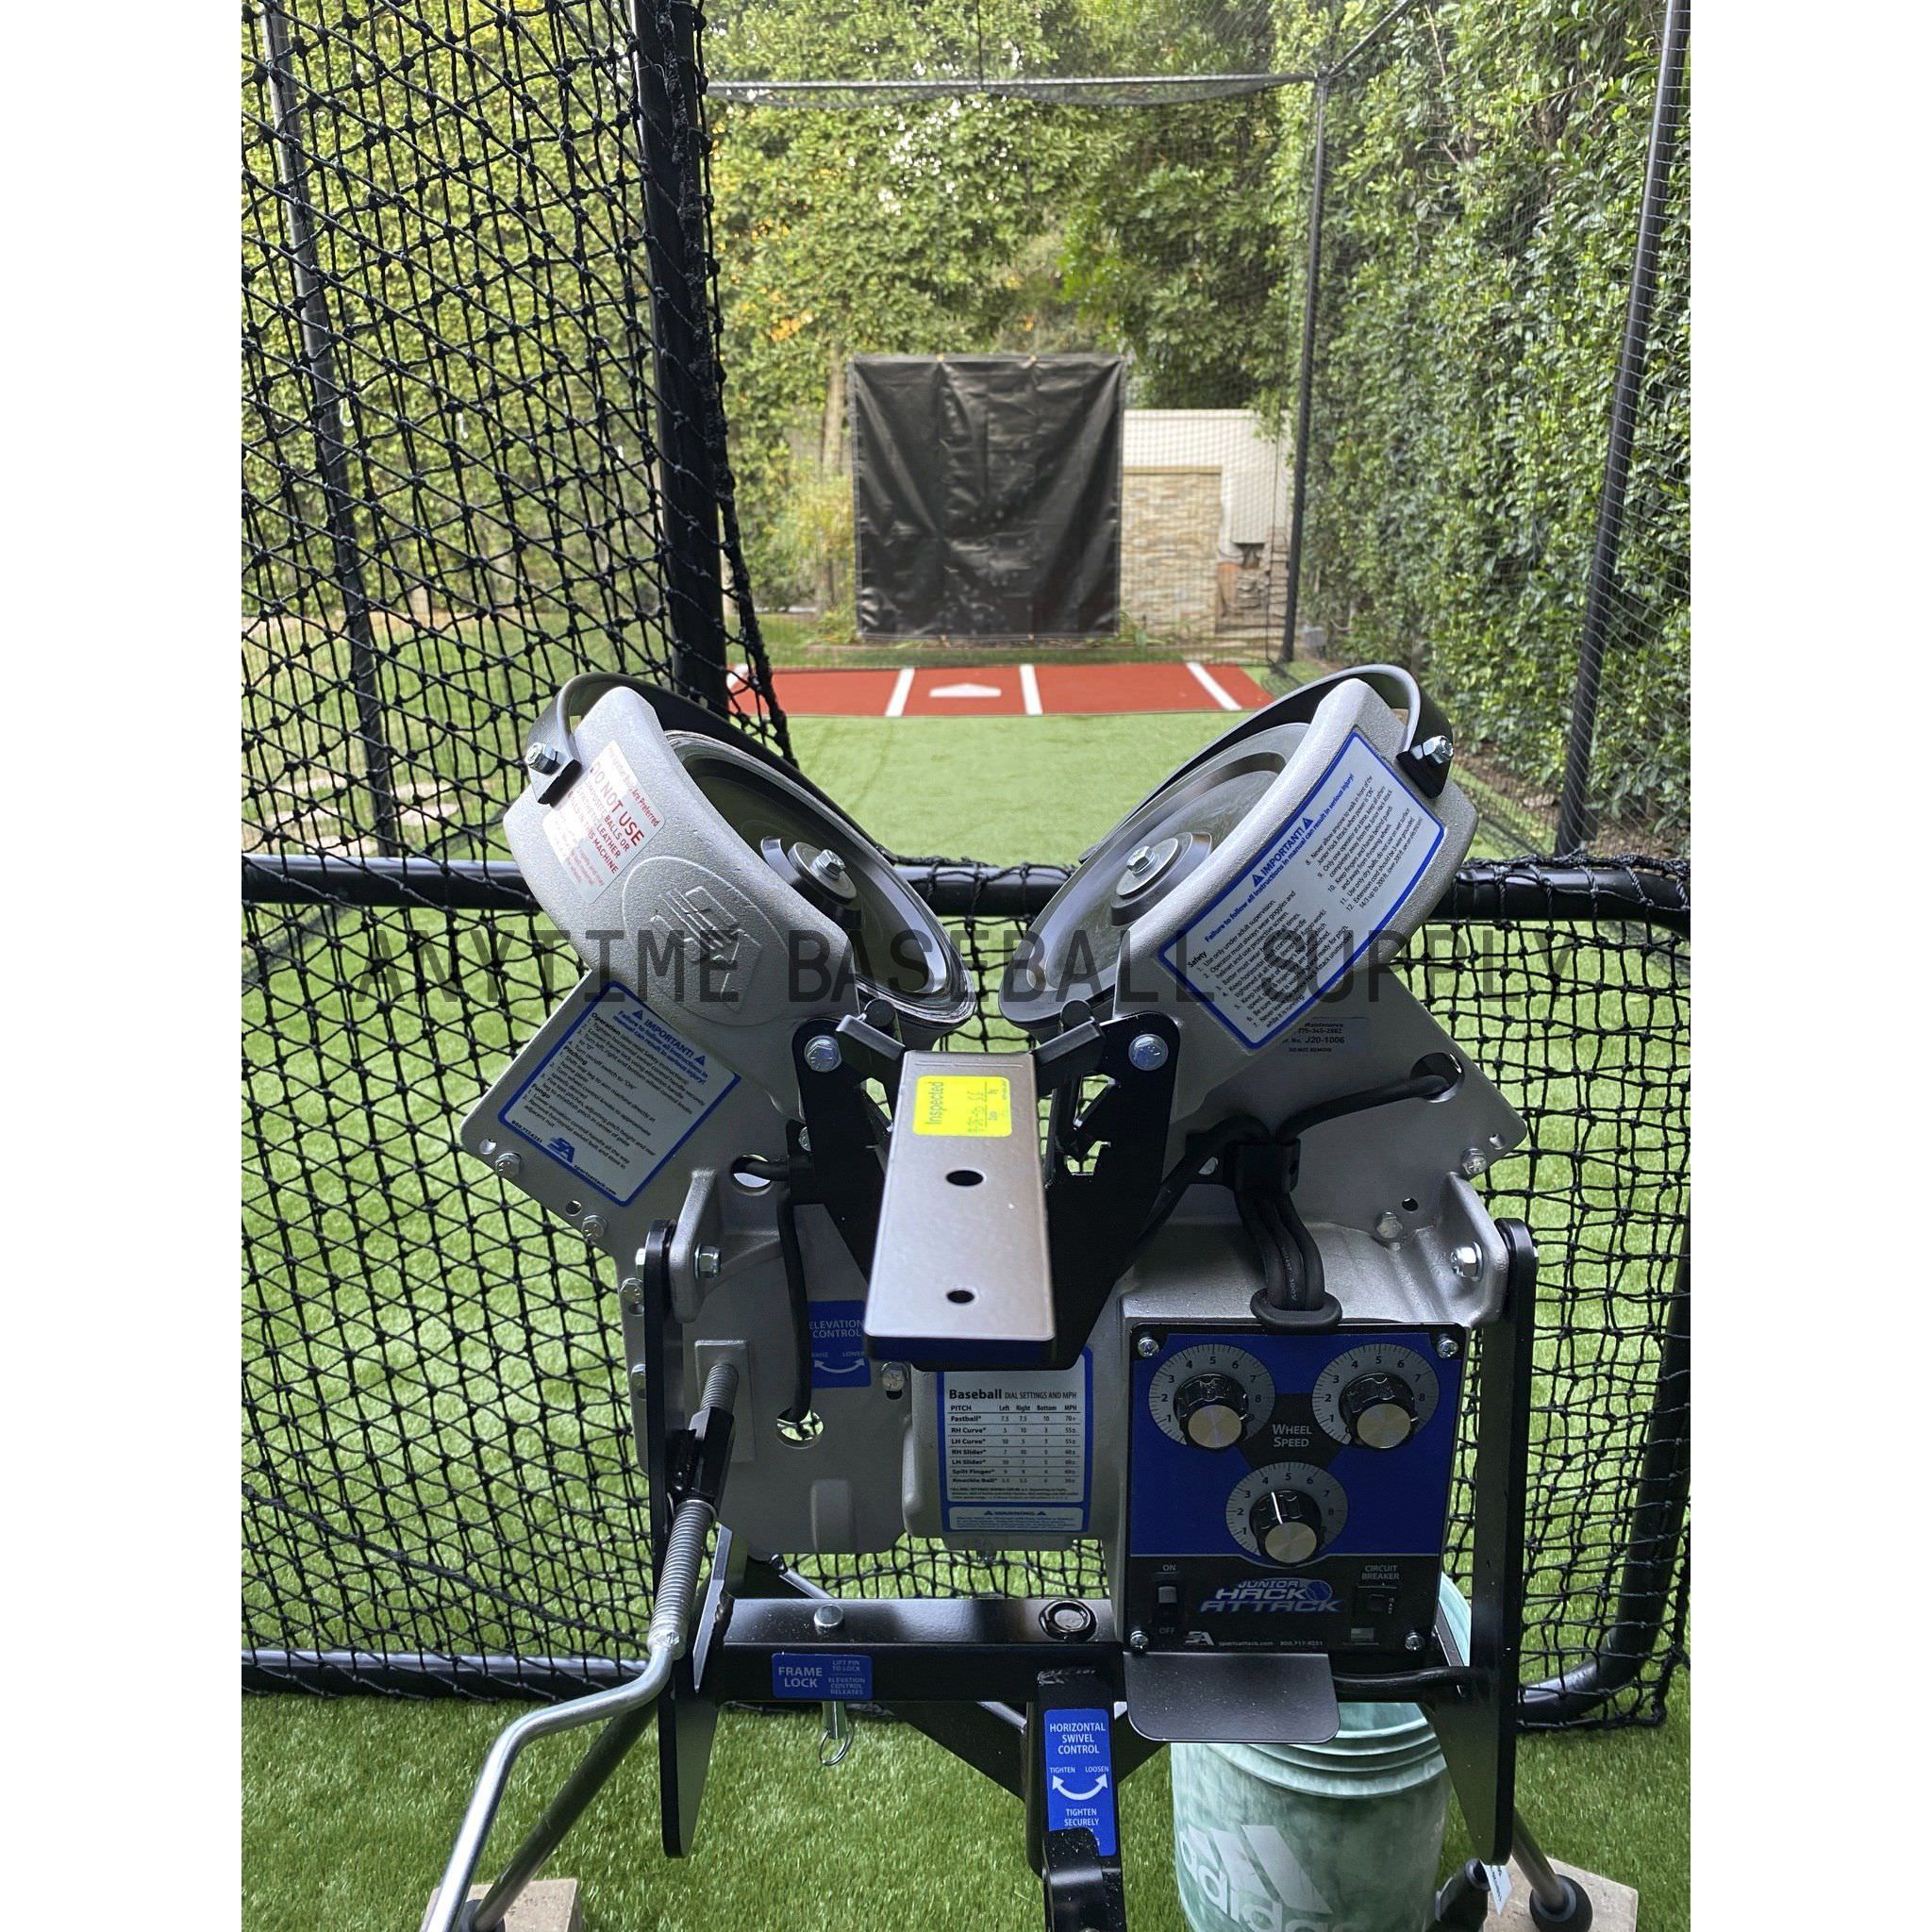 Jr. Hack Attack Three Wheel Pitching Machine rear view inside batting cage